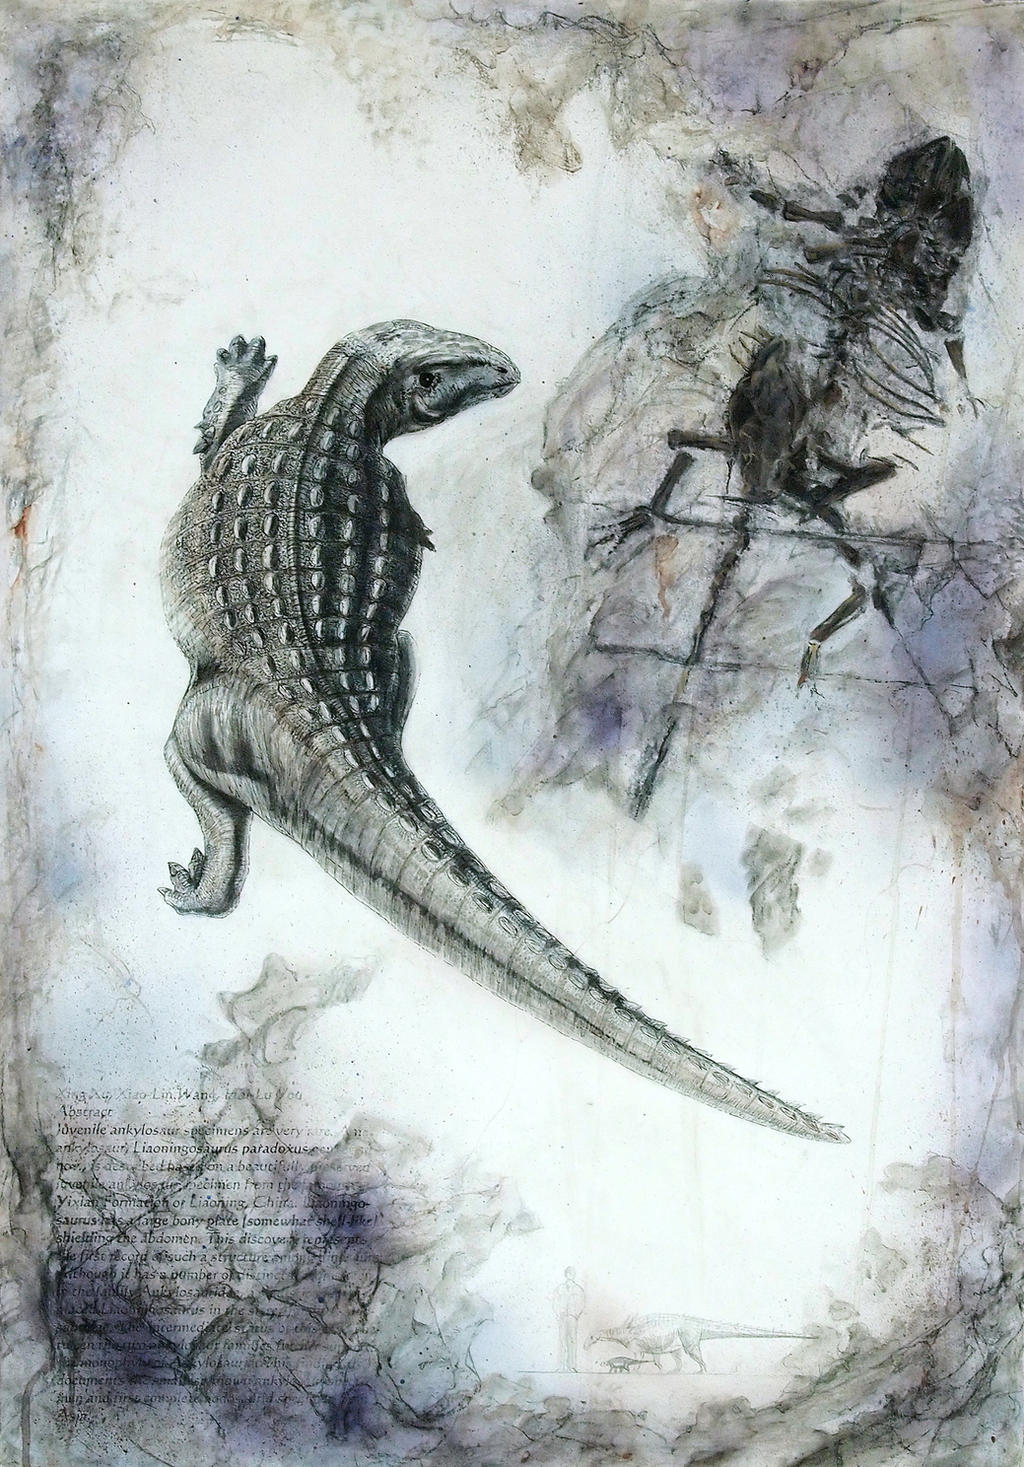 Jehol Biota--Liaoningosaurus paradoxus